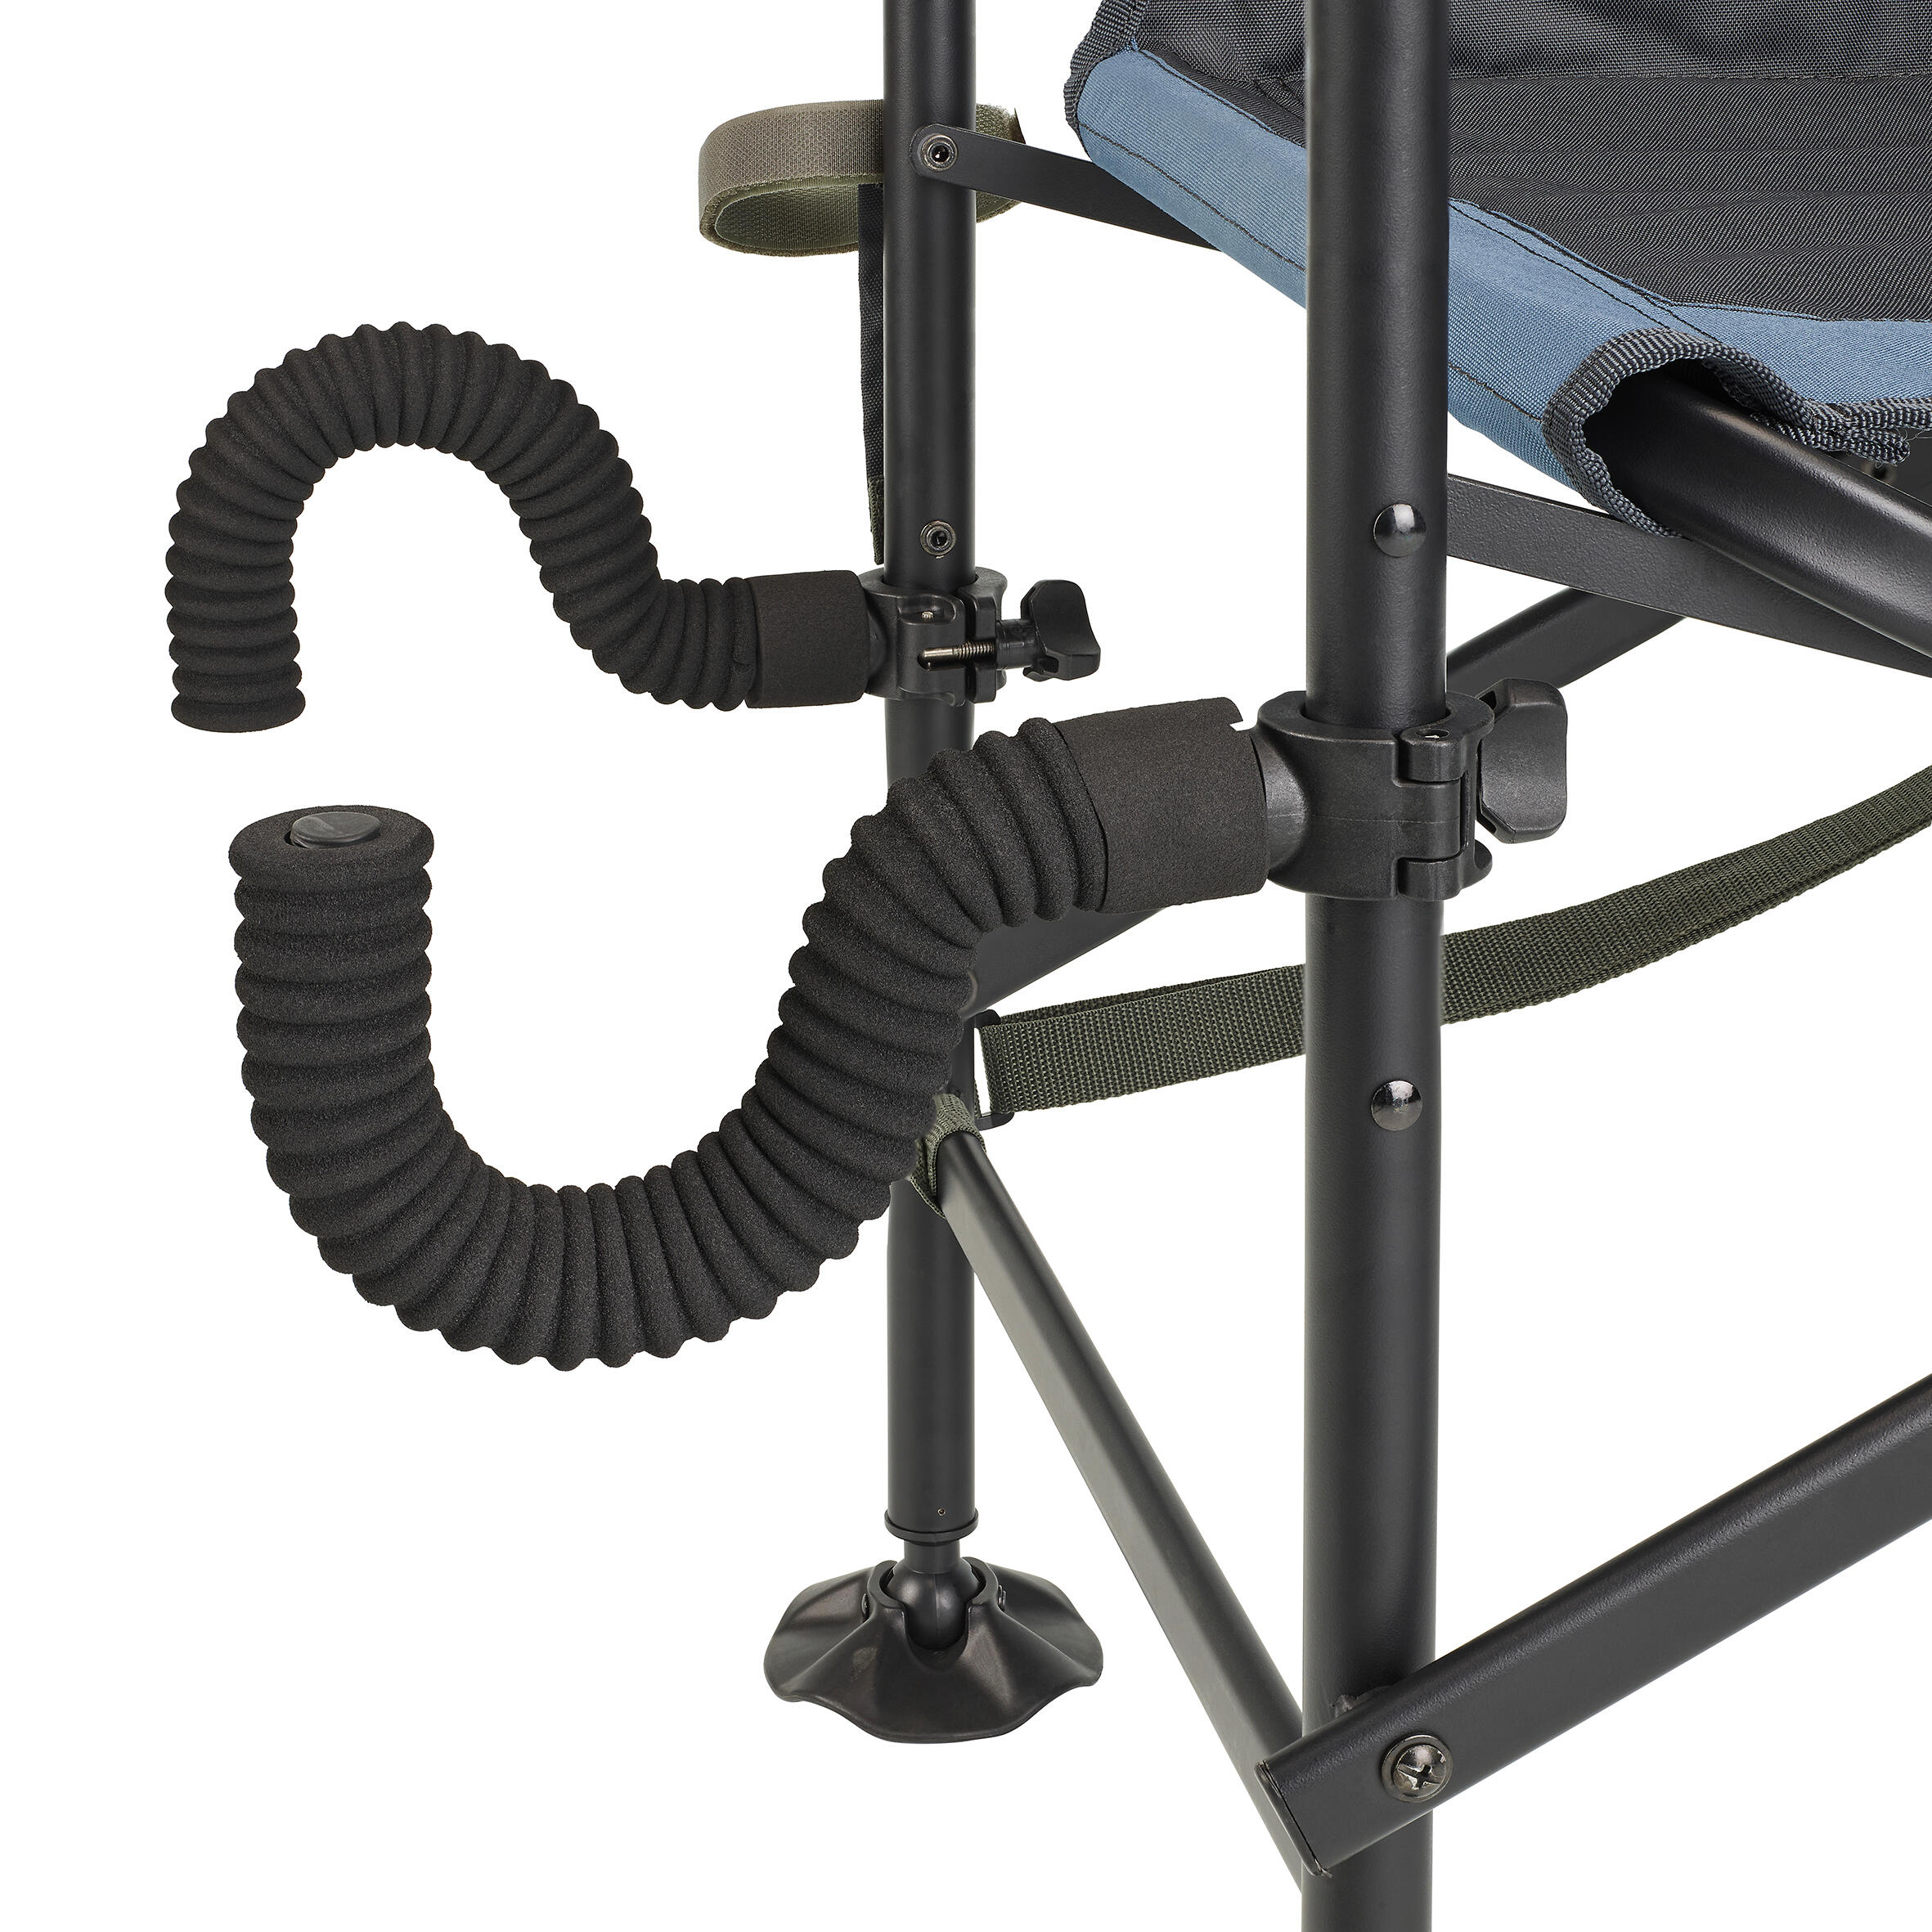 USB outdoor ice fishing beach chair three-speed temperature adjustment  heating seat cushion black crystal velvet backrest